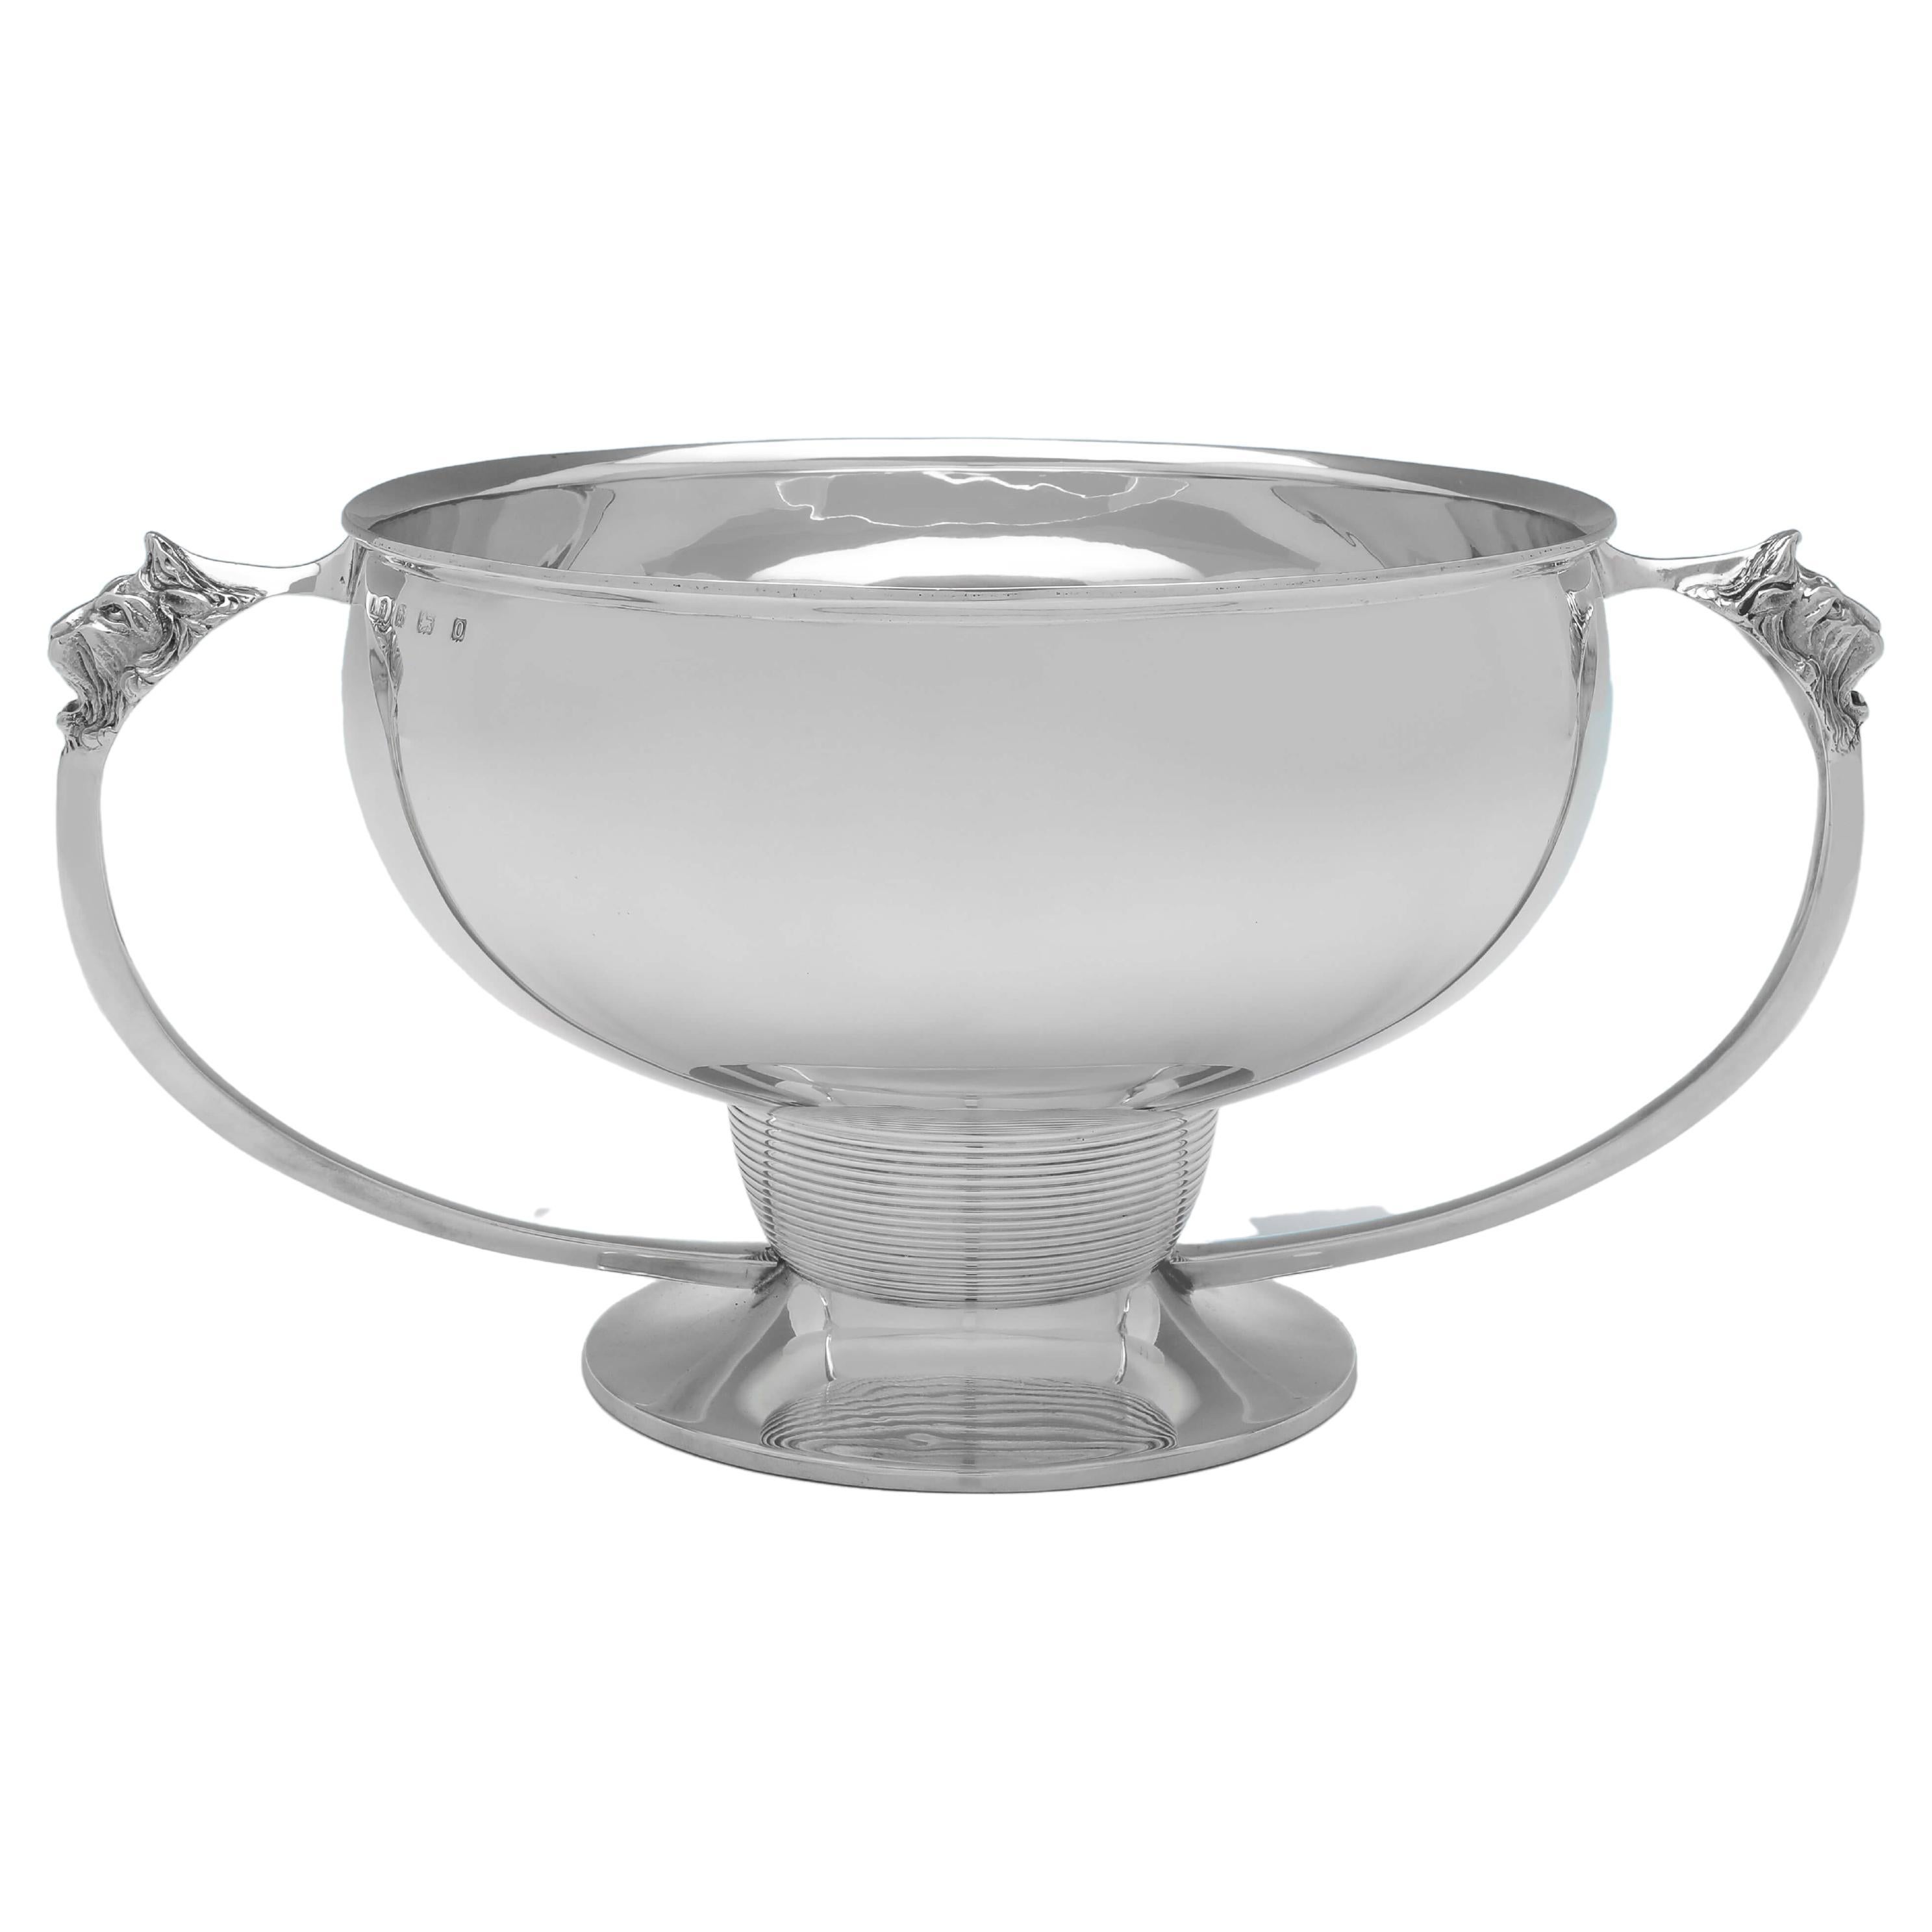 Art Deco Sterling Silver Centrepiece Bowl, Birmingham 1938